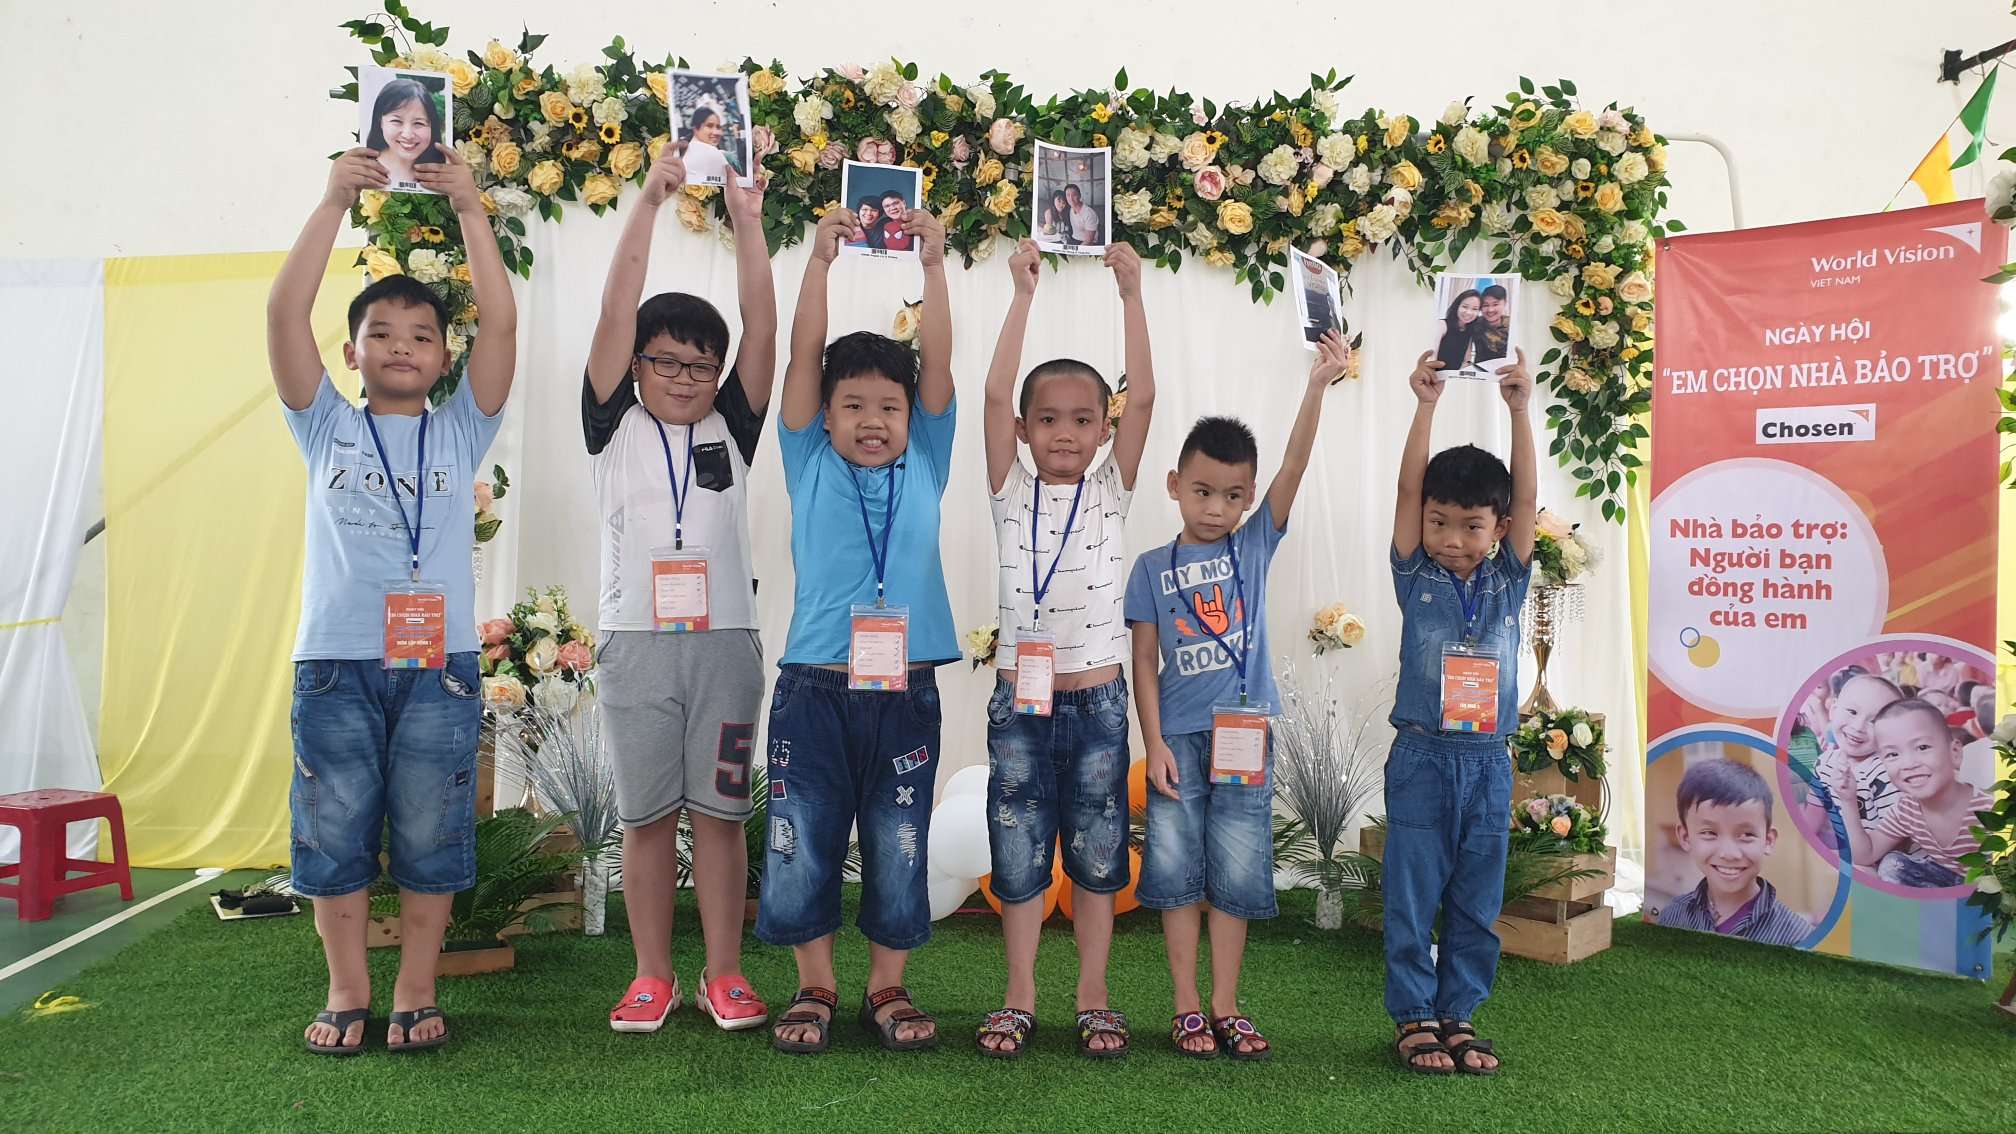 Children from Son Tra with their #chosen sponsor 